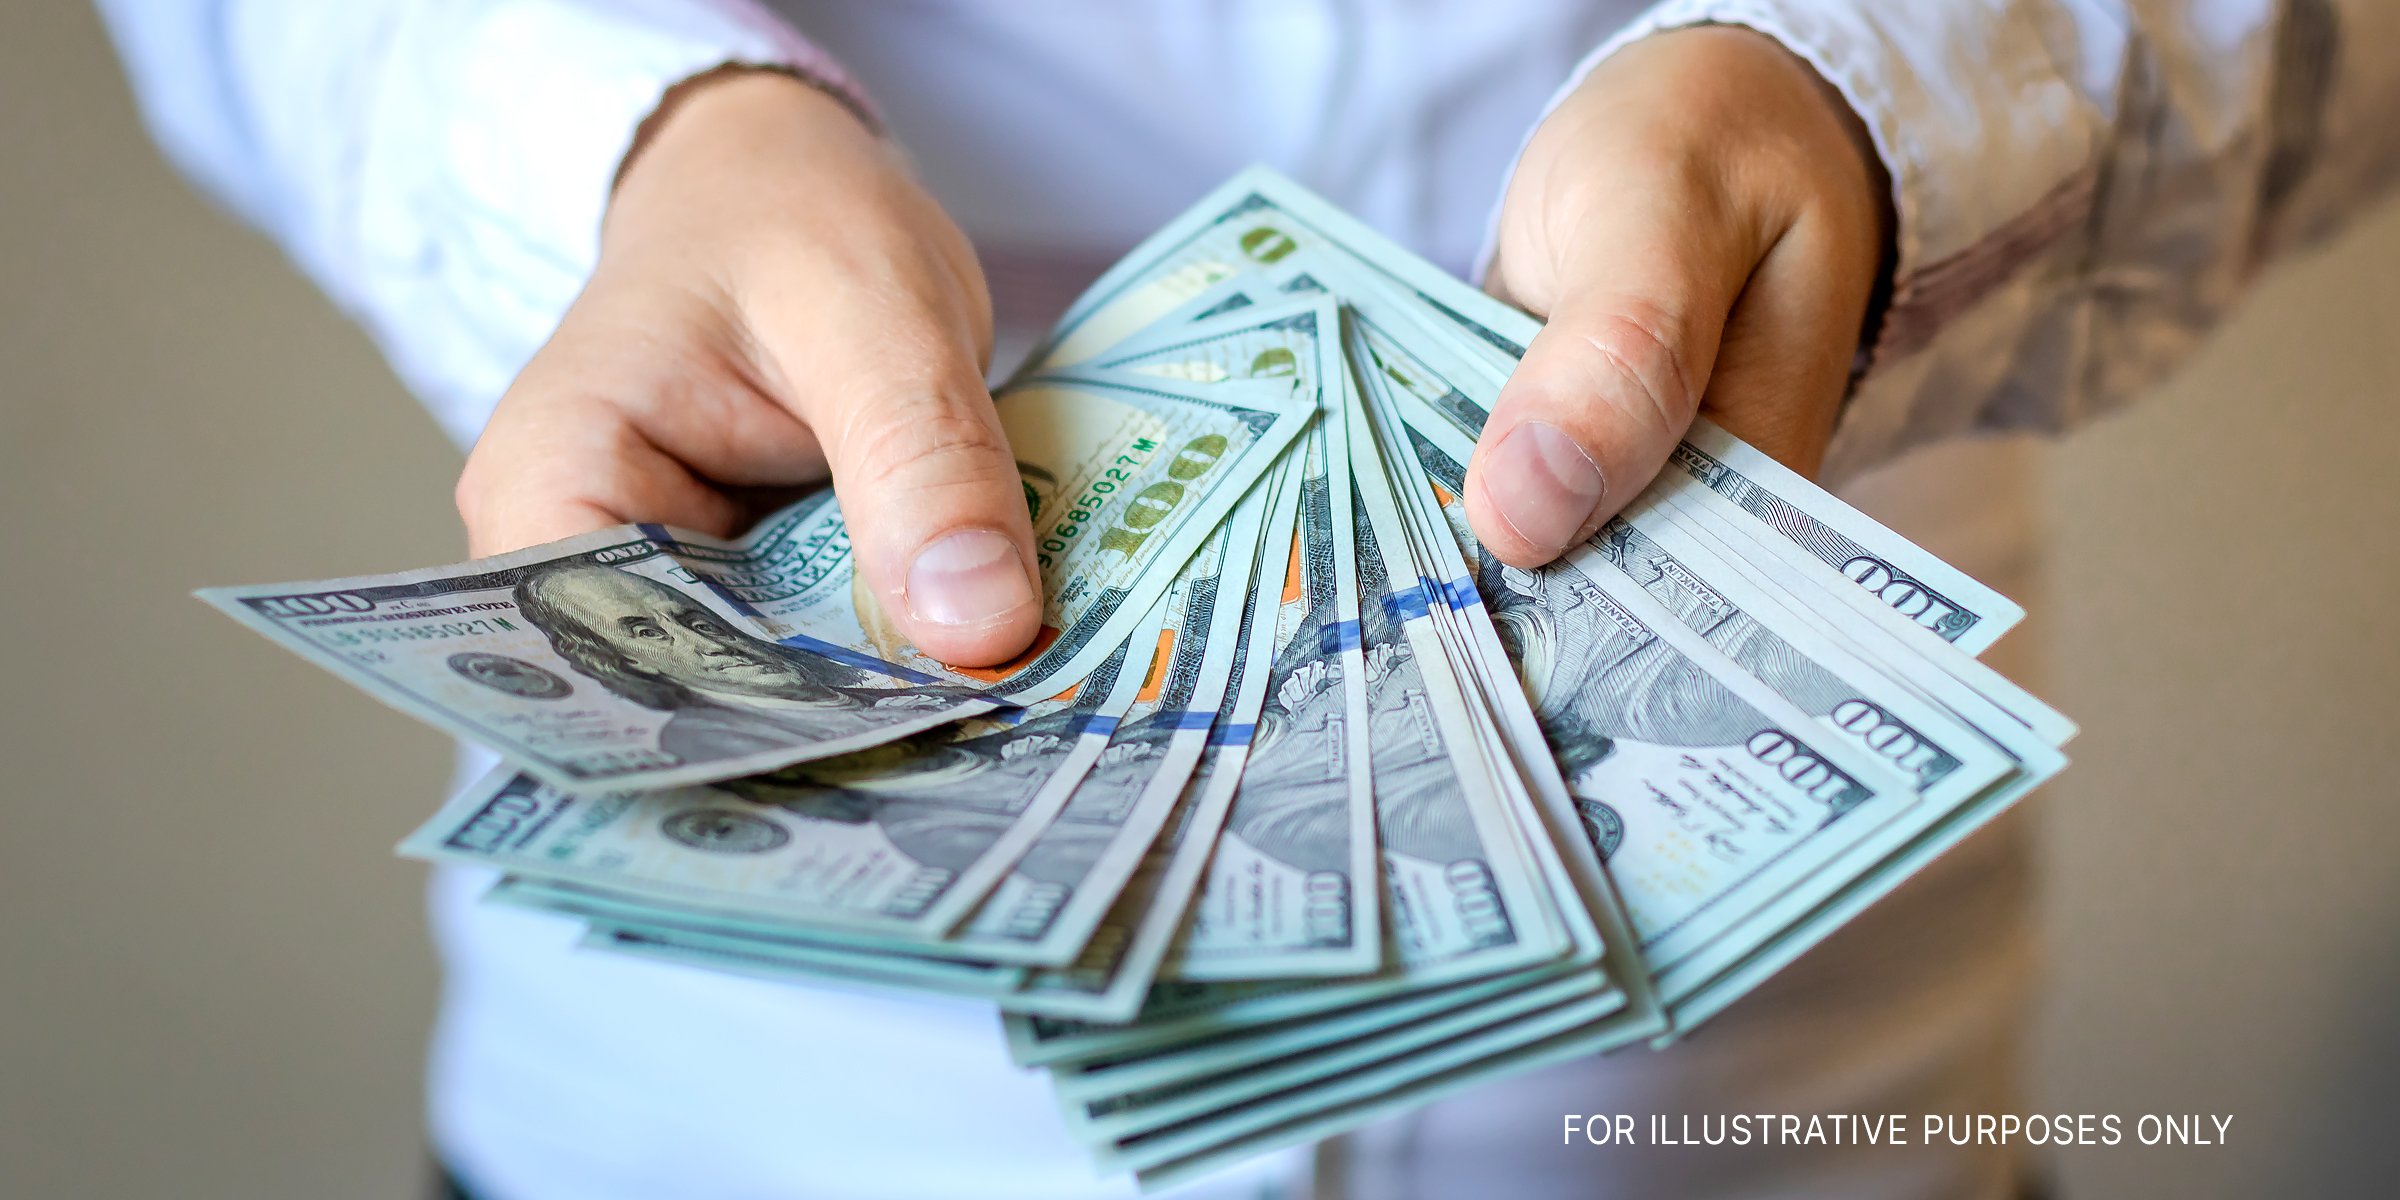 A person holding dollar bills | Source: Shutterstock